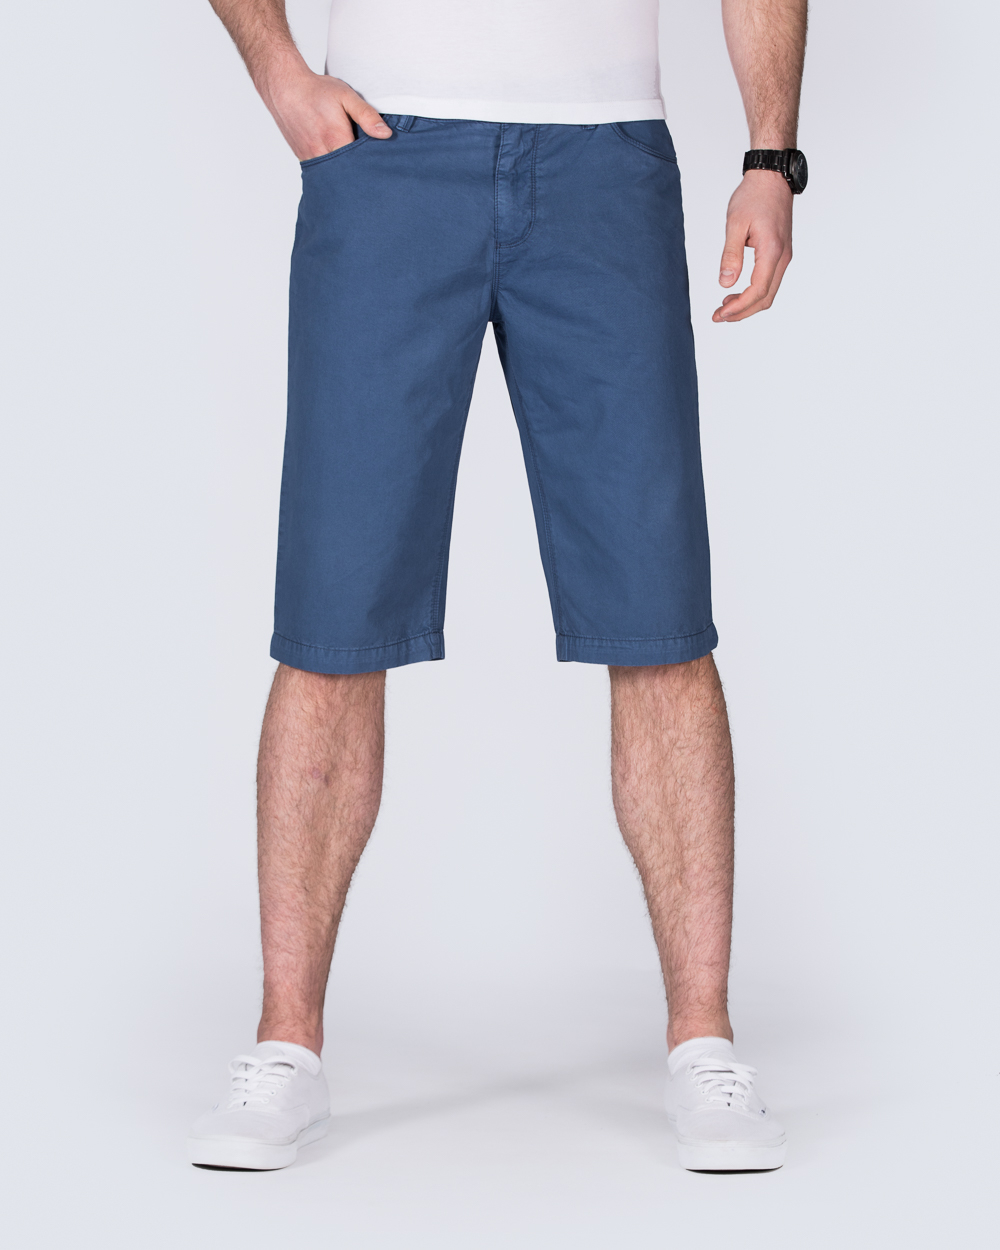 Redpoint Brant Tall Shorts (indigo) | 2tall.com